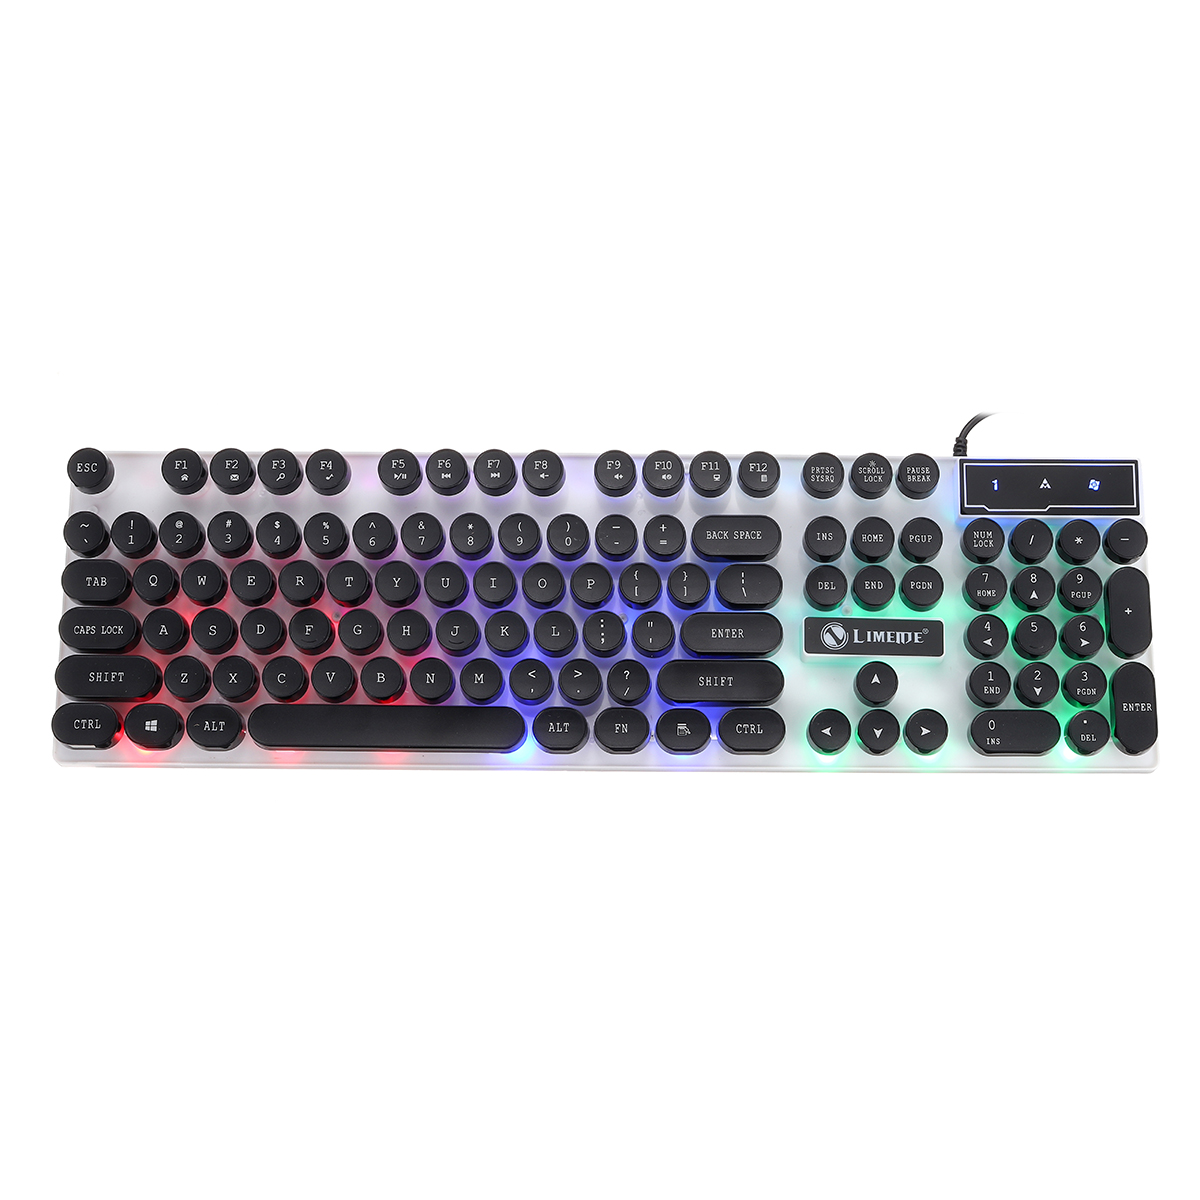 

104 Key Wired PUNK Backlight Adjust RGB LED Backlit Ergonomic Gaming Keyboard for PC Laptop